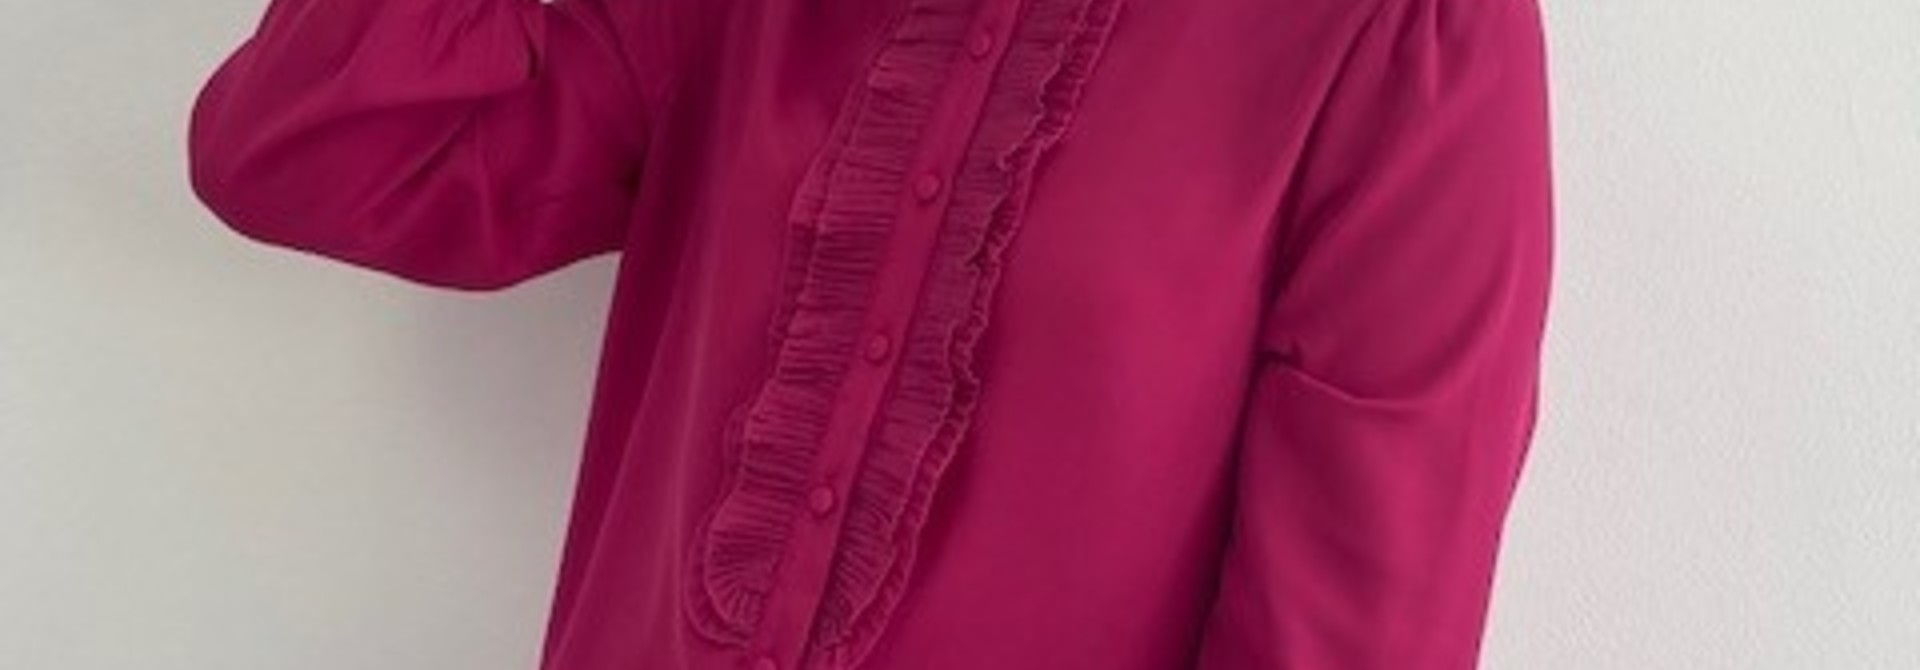 Sarhia bavet blouse Fushia